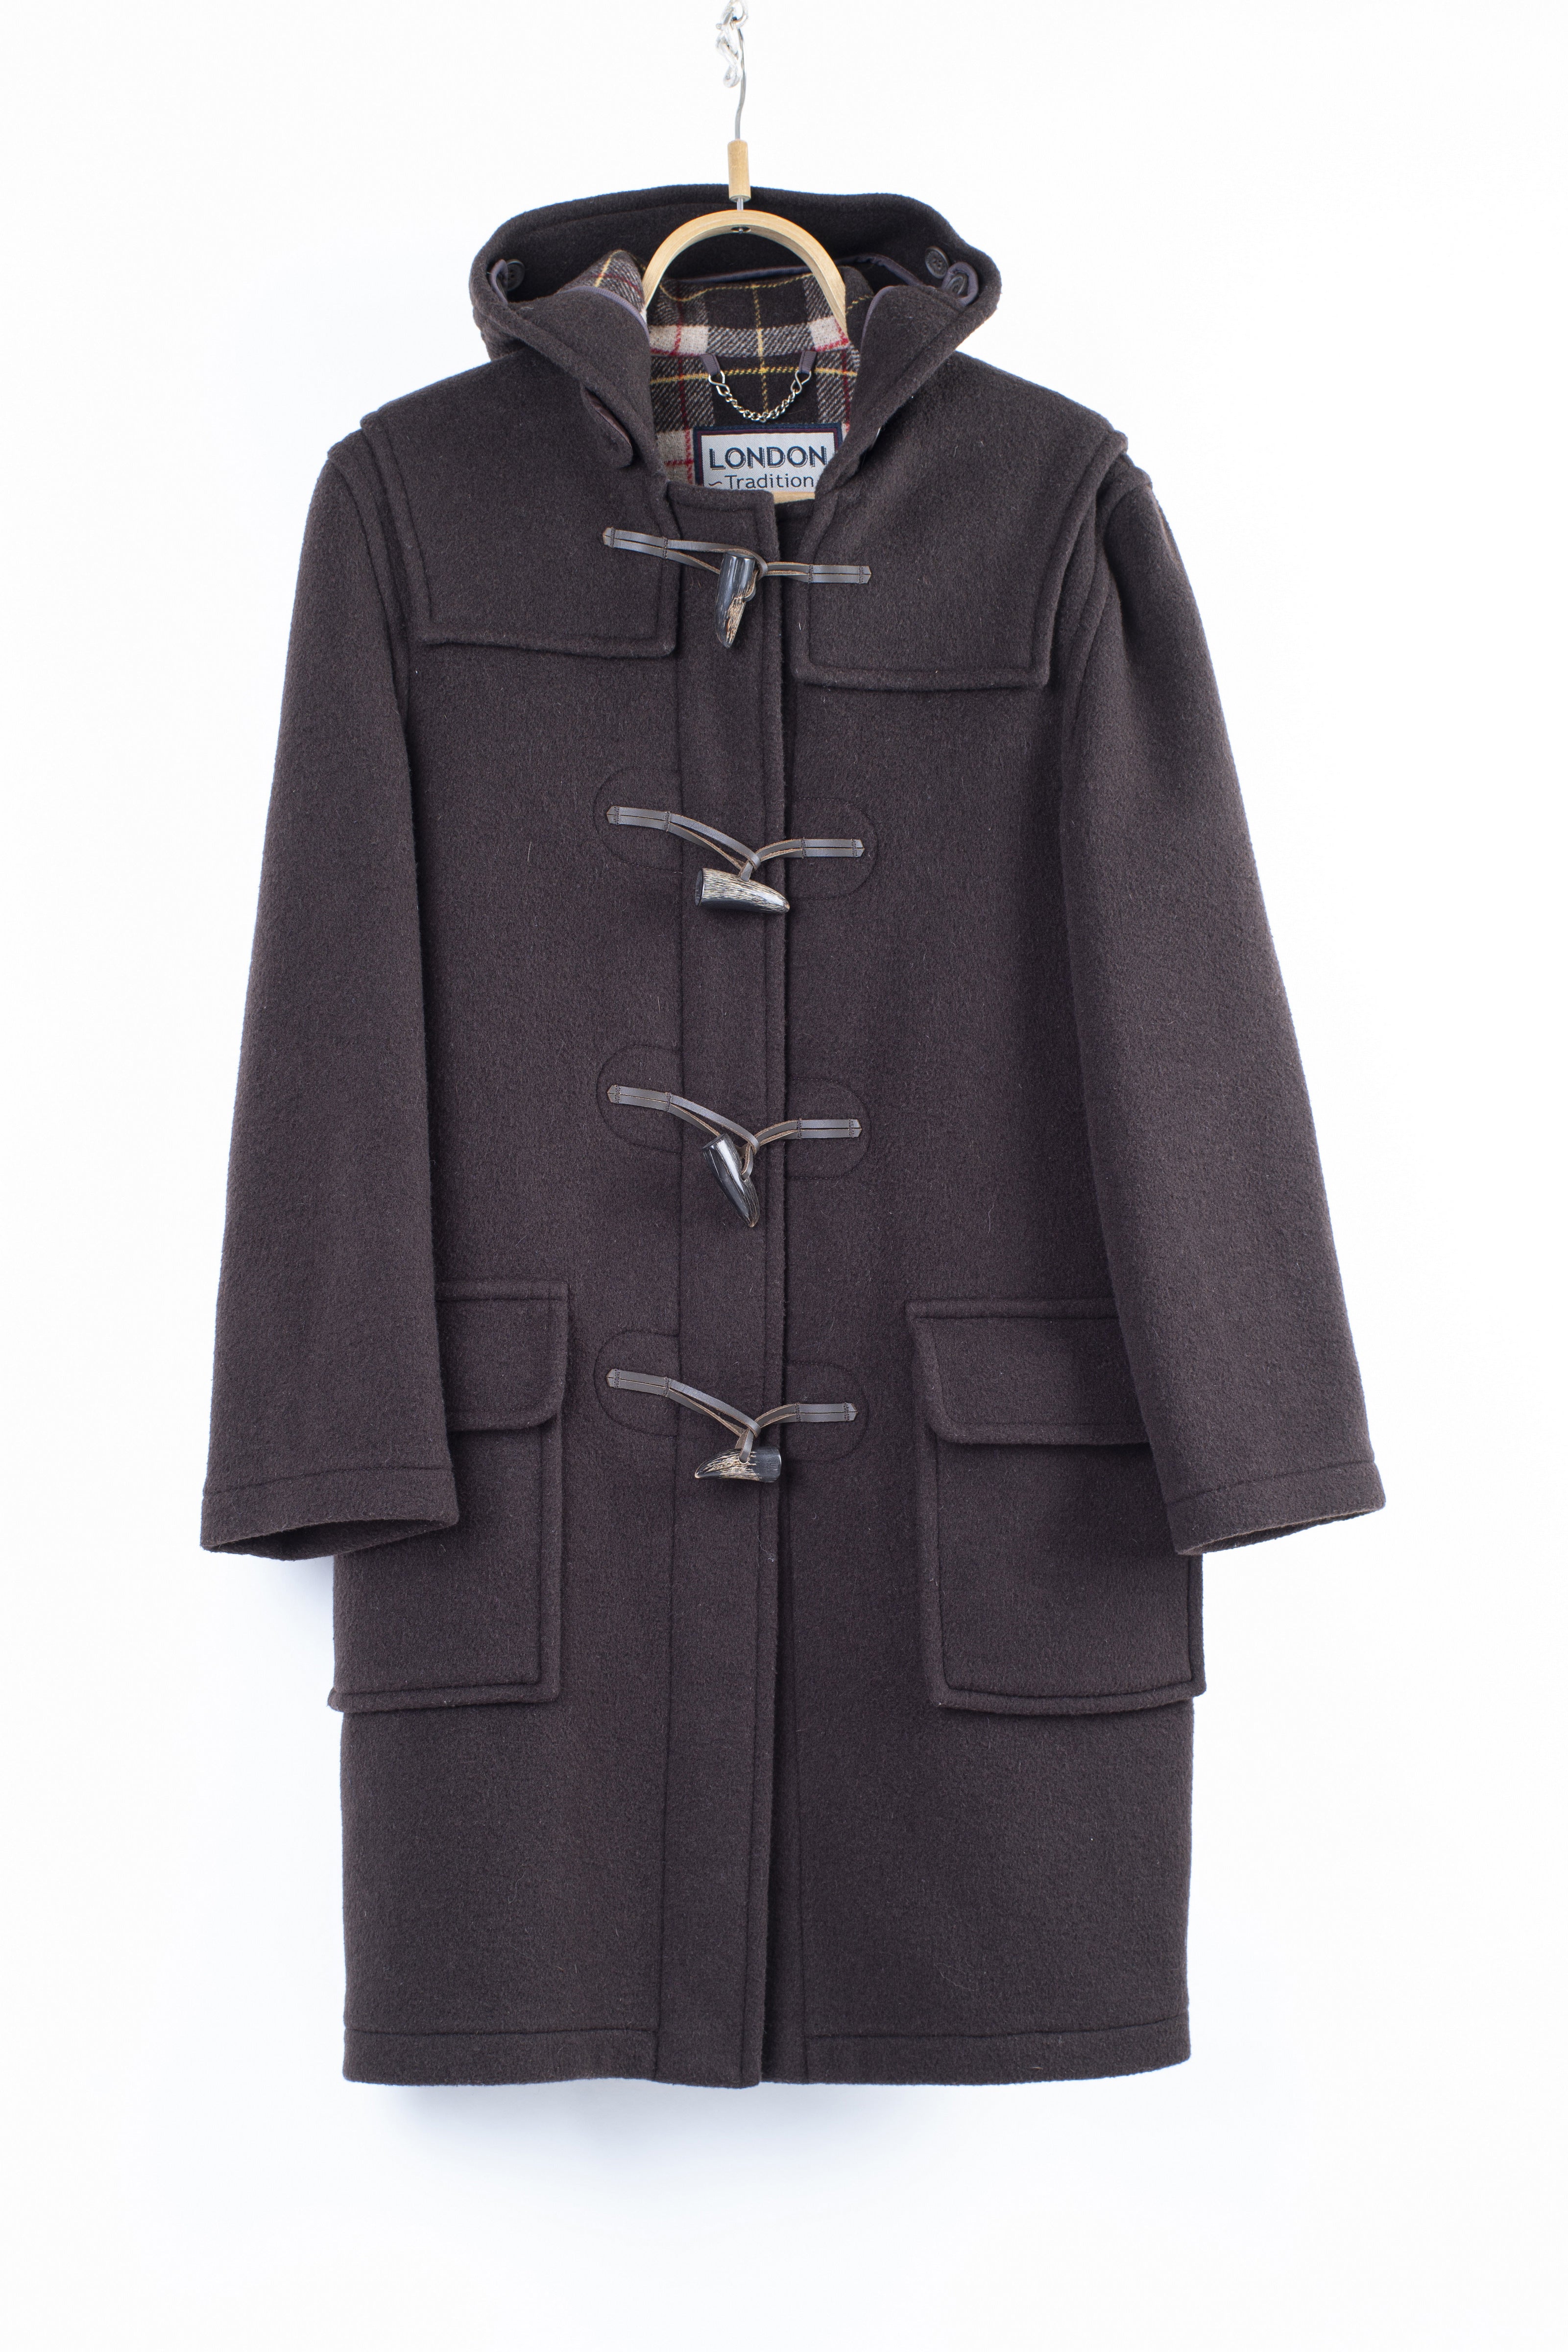 London Tradition Brown Duffle Coat women's Size S